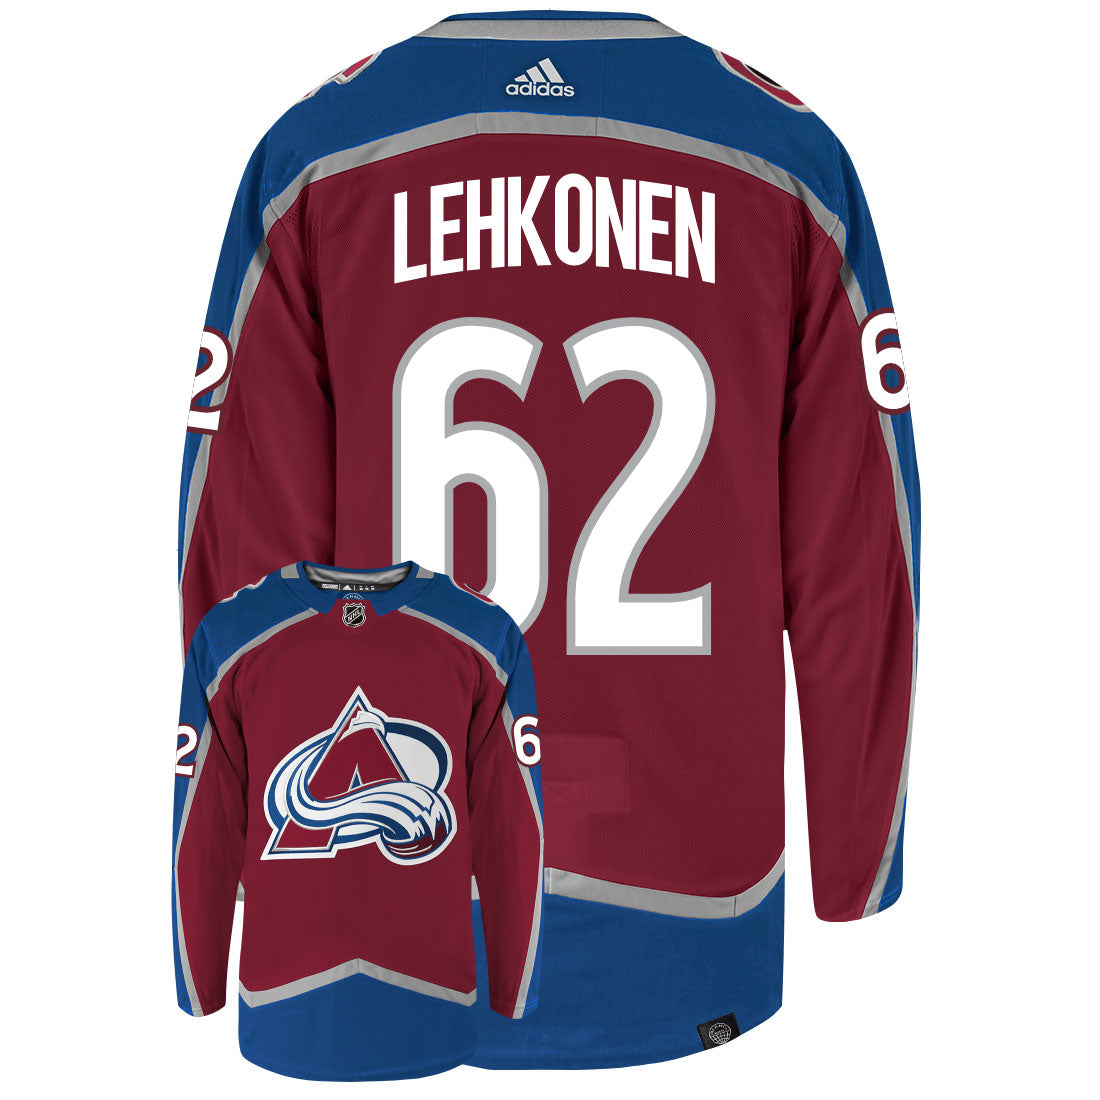 Arturri Lehkonen Colorado Avalanche Adidas Primegreen Authentic Home NHL Hockey Jersey - Back/Front View